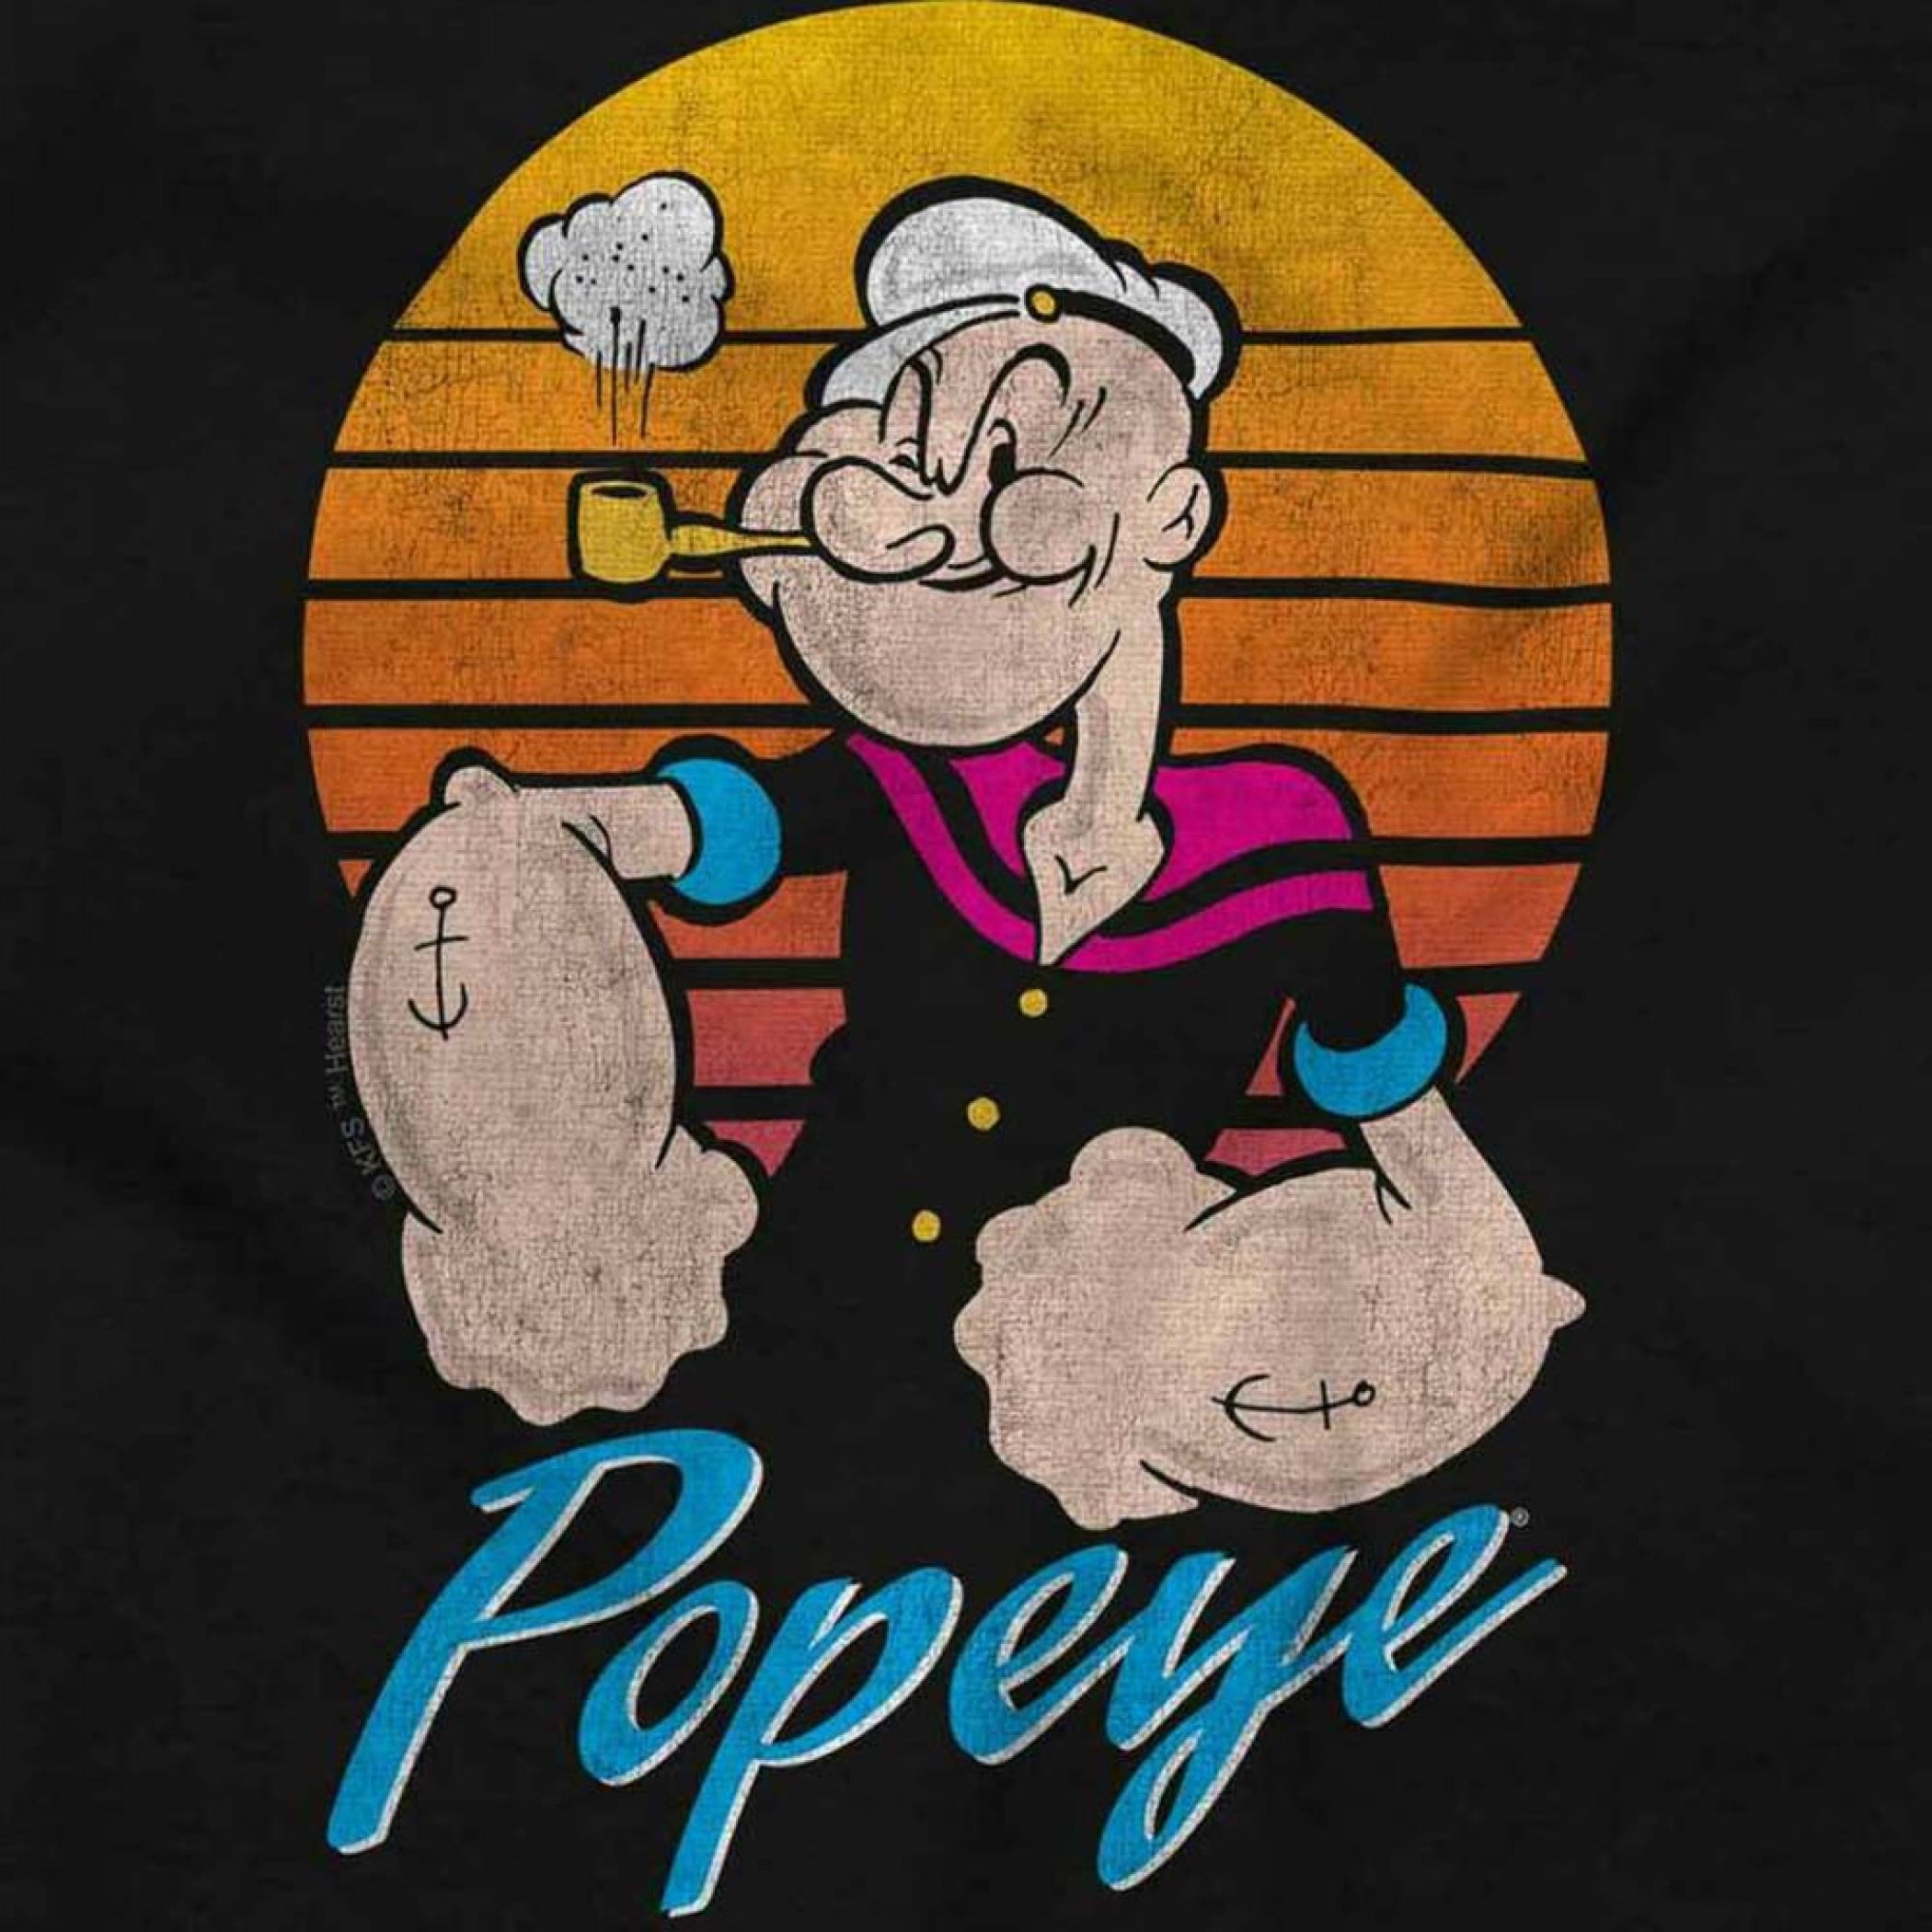 Popeye - Art by Kintner - Paintings & Prints, People & Figures, Animation,  Anime, & Comics, Comics - ArtPal